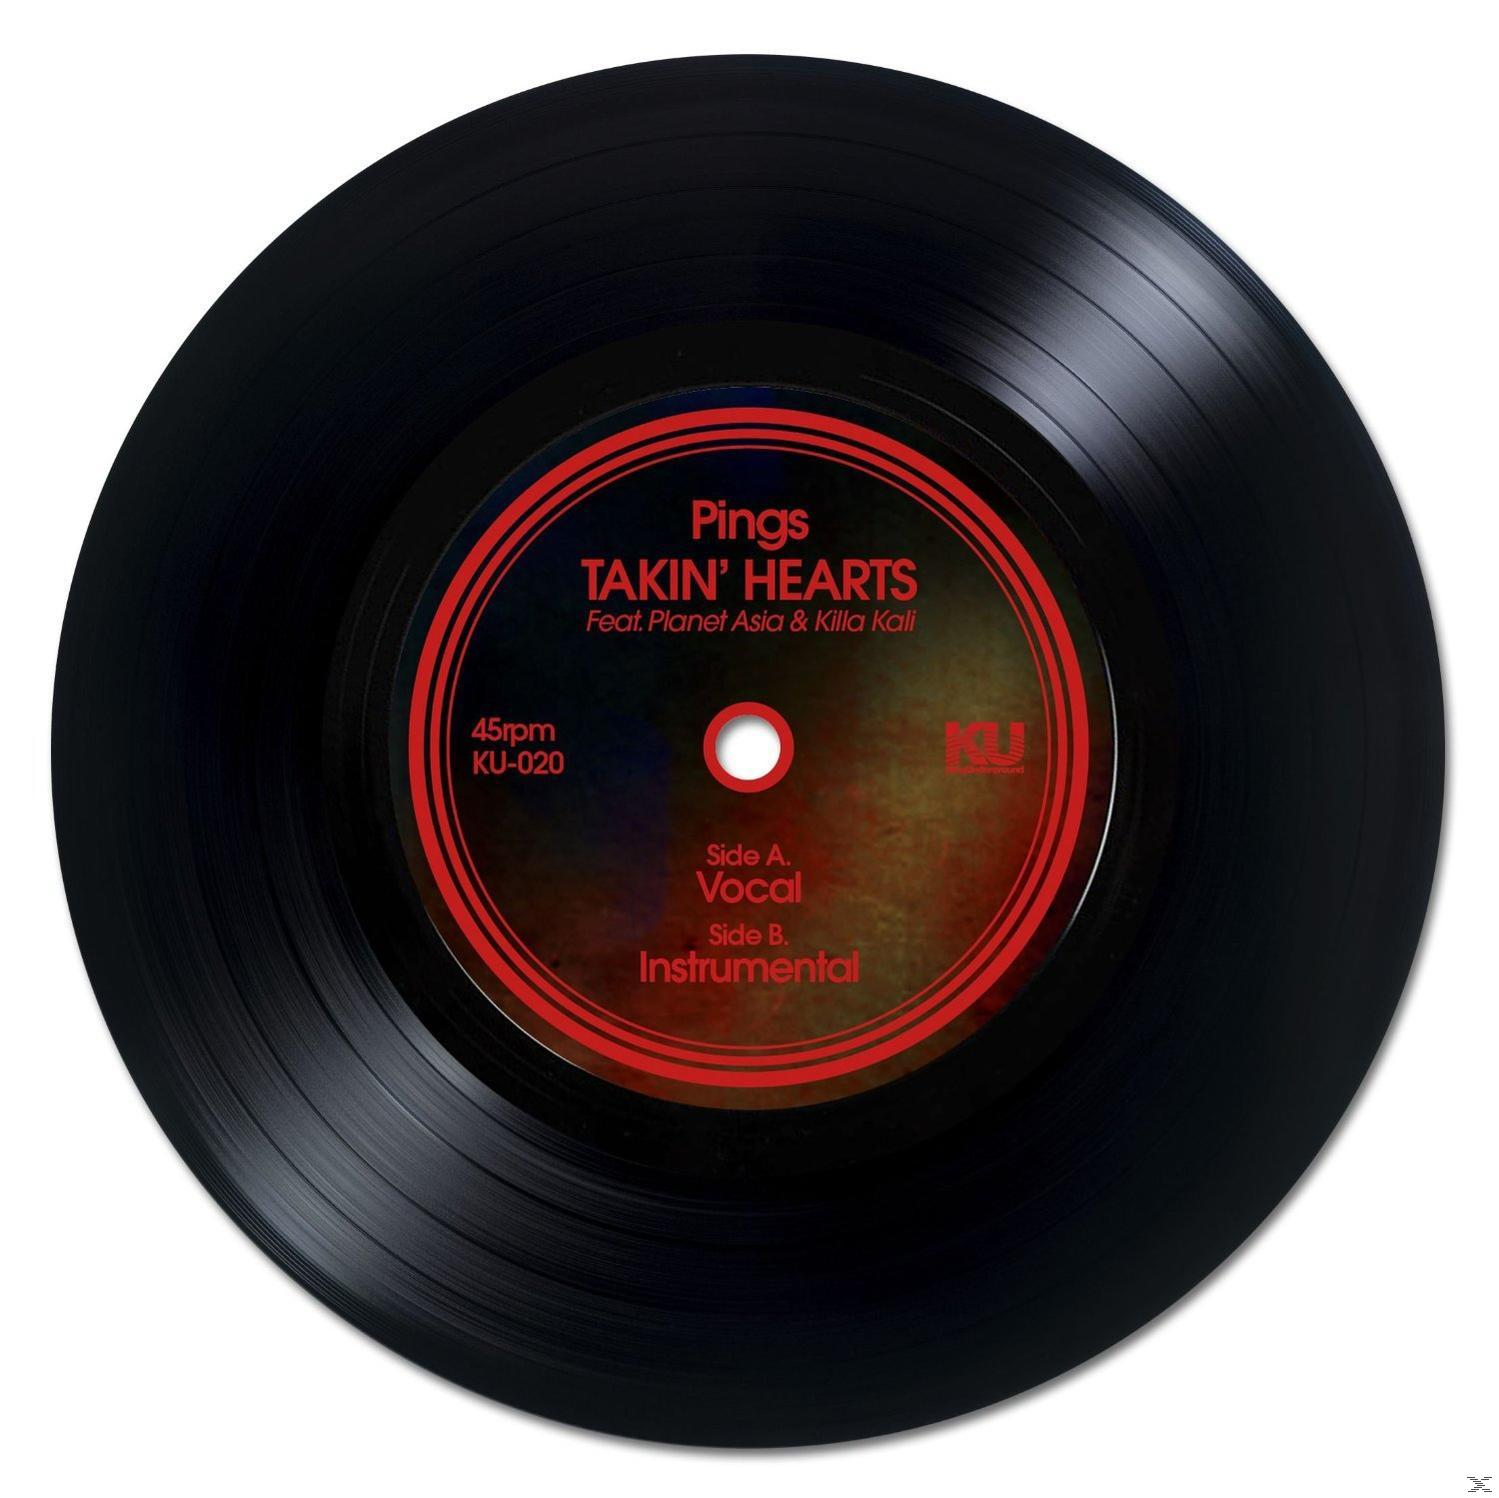 - Pings - Taking (Vinyl) Hearts